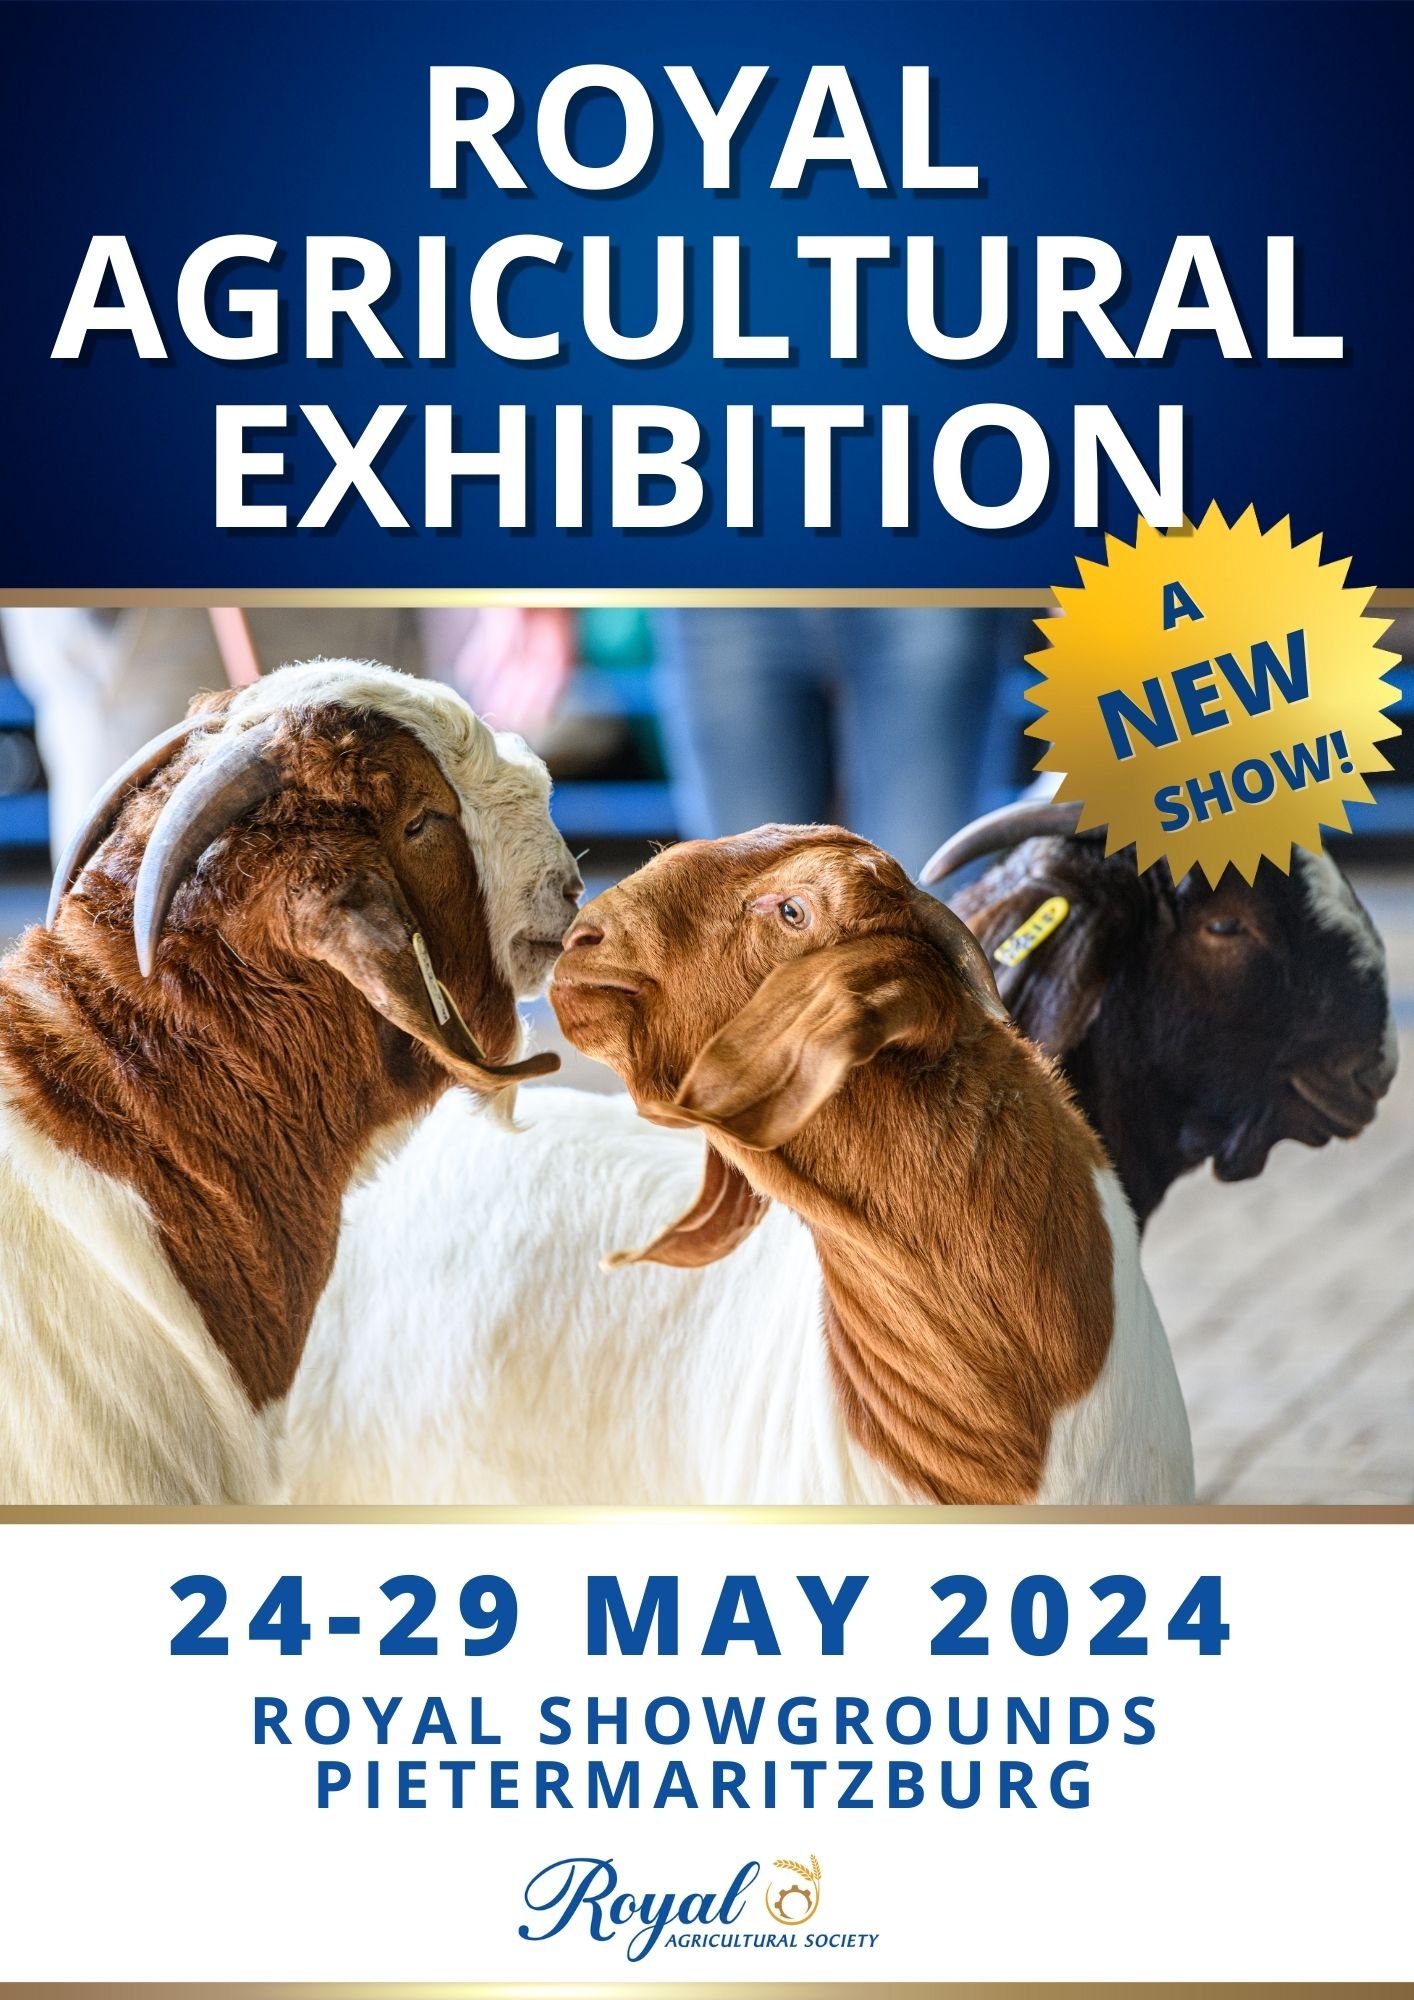 royal-agricultural-exhibition-may-2024-2.jpg